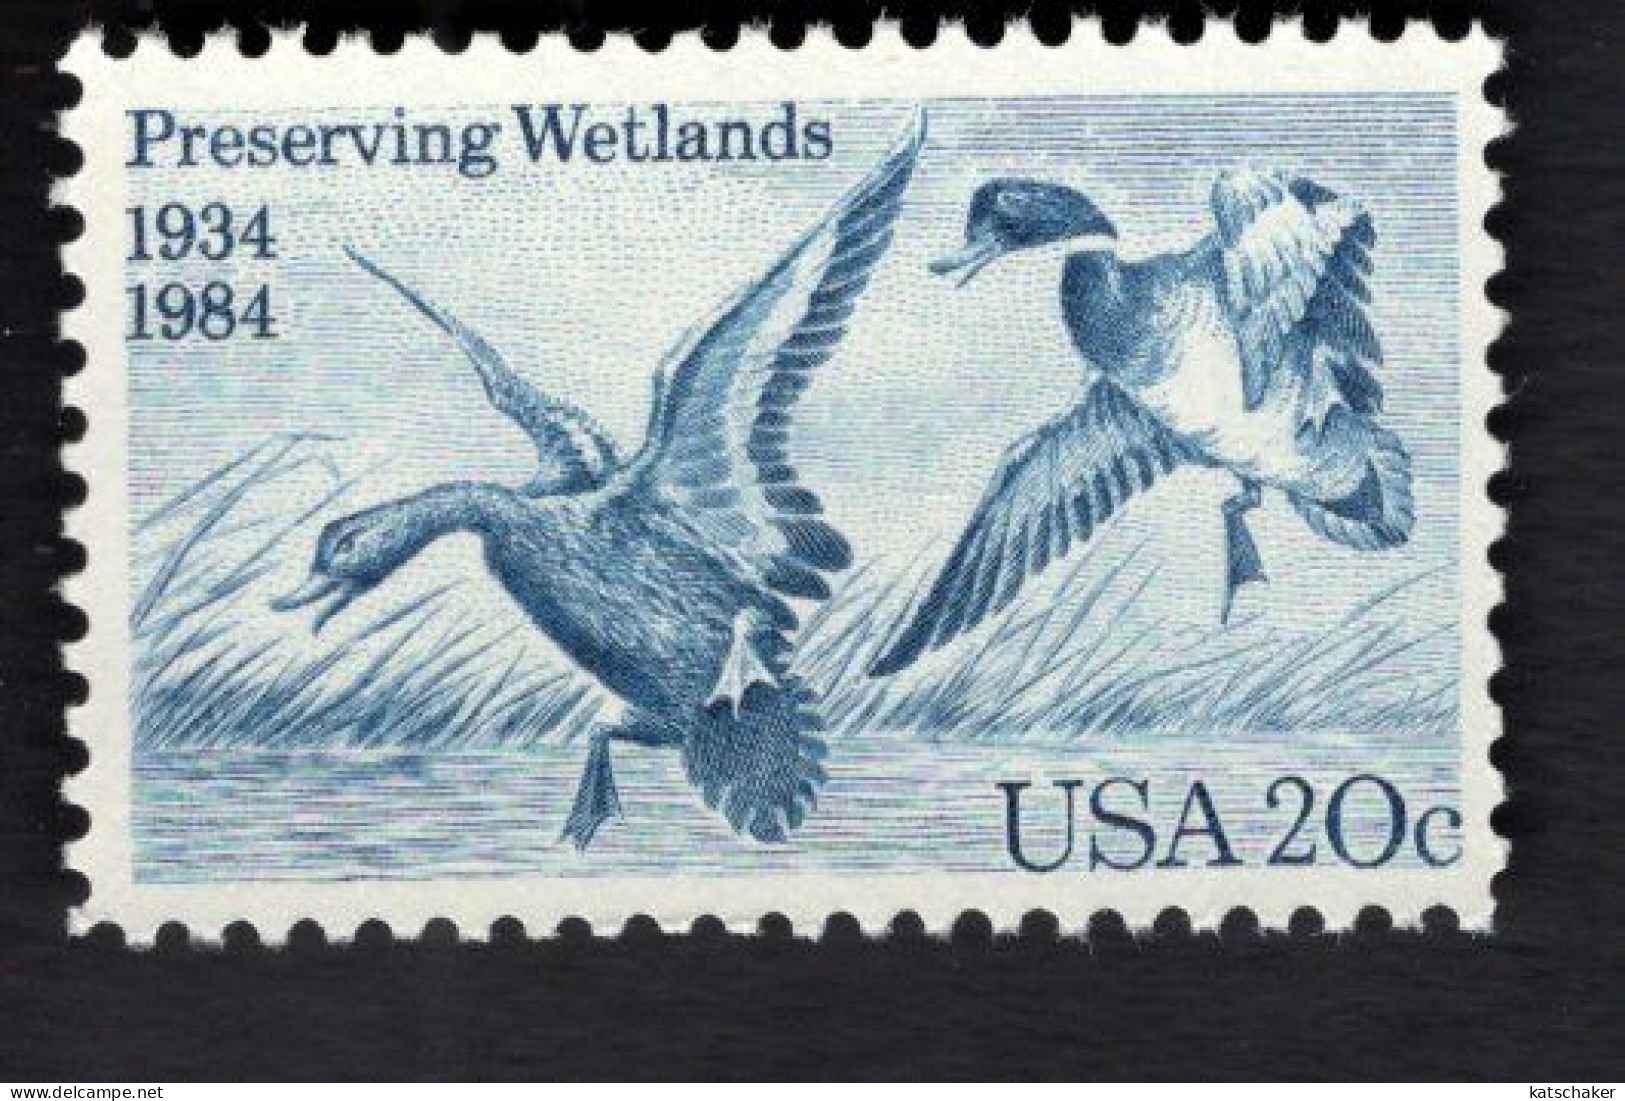 200895299 1984 SCOTT 2092 (XX) POSTFRIS MINT NEVER HINGED - WATERFOWL PRESERVATIONC ACT - 50TH ANNIV - BIRDS - WETLANDS - Unused Stamps